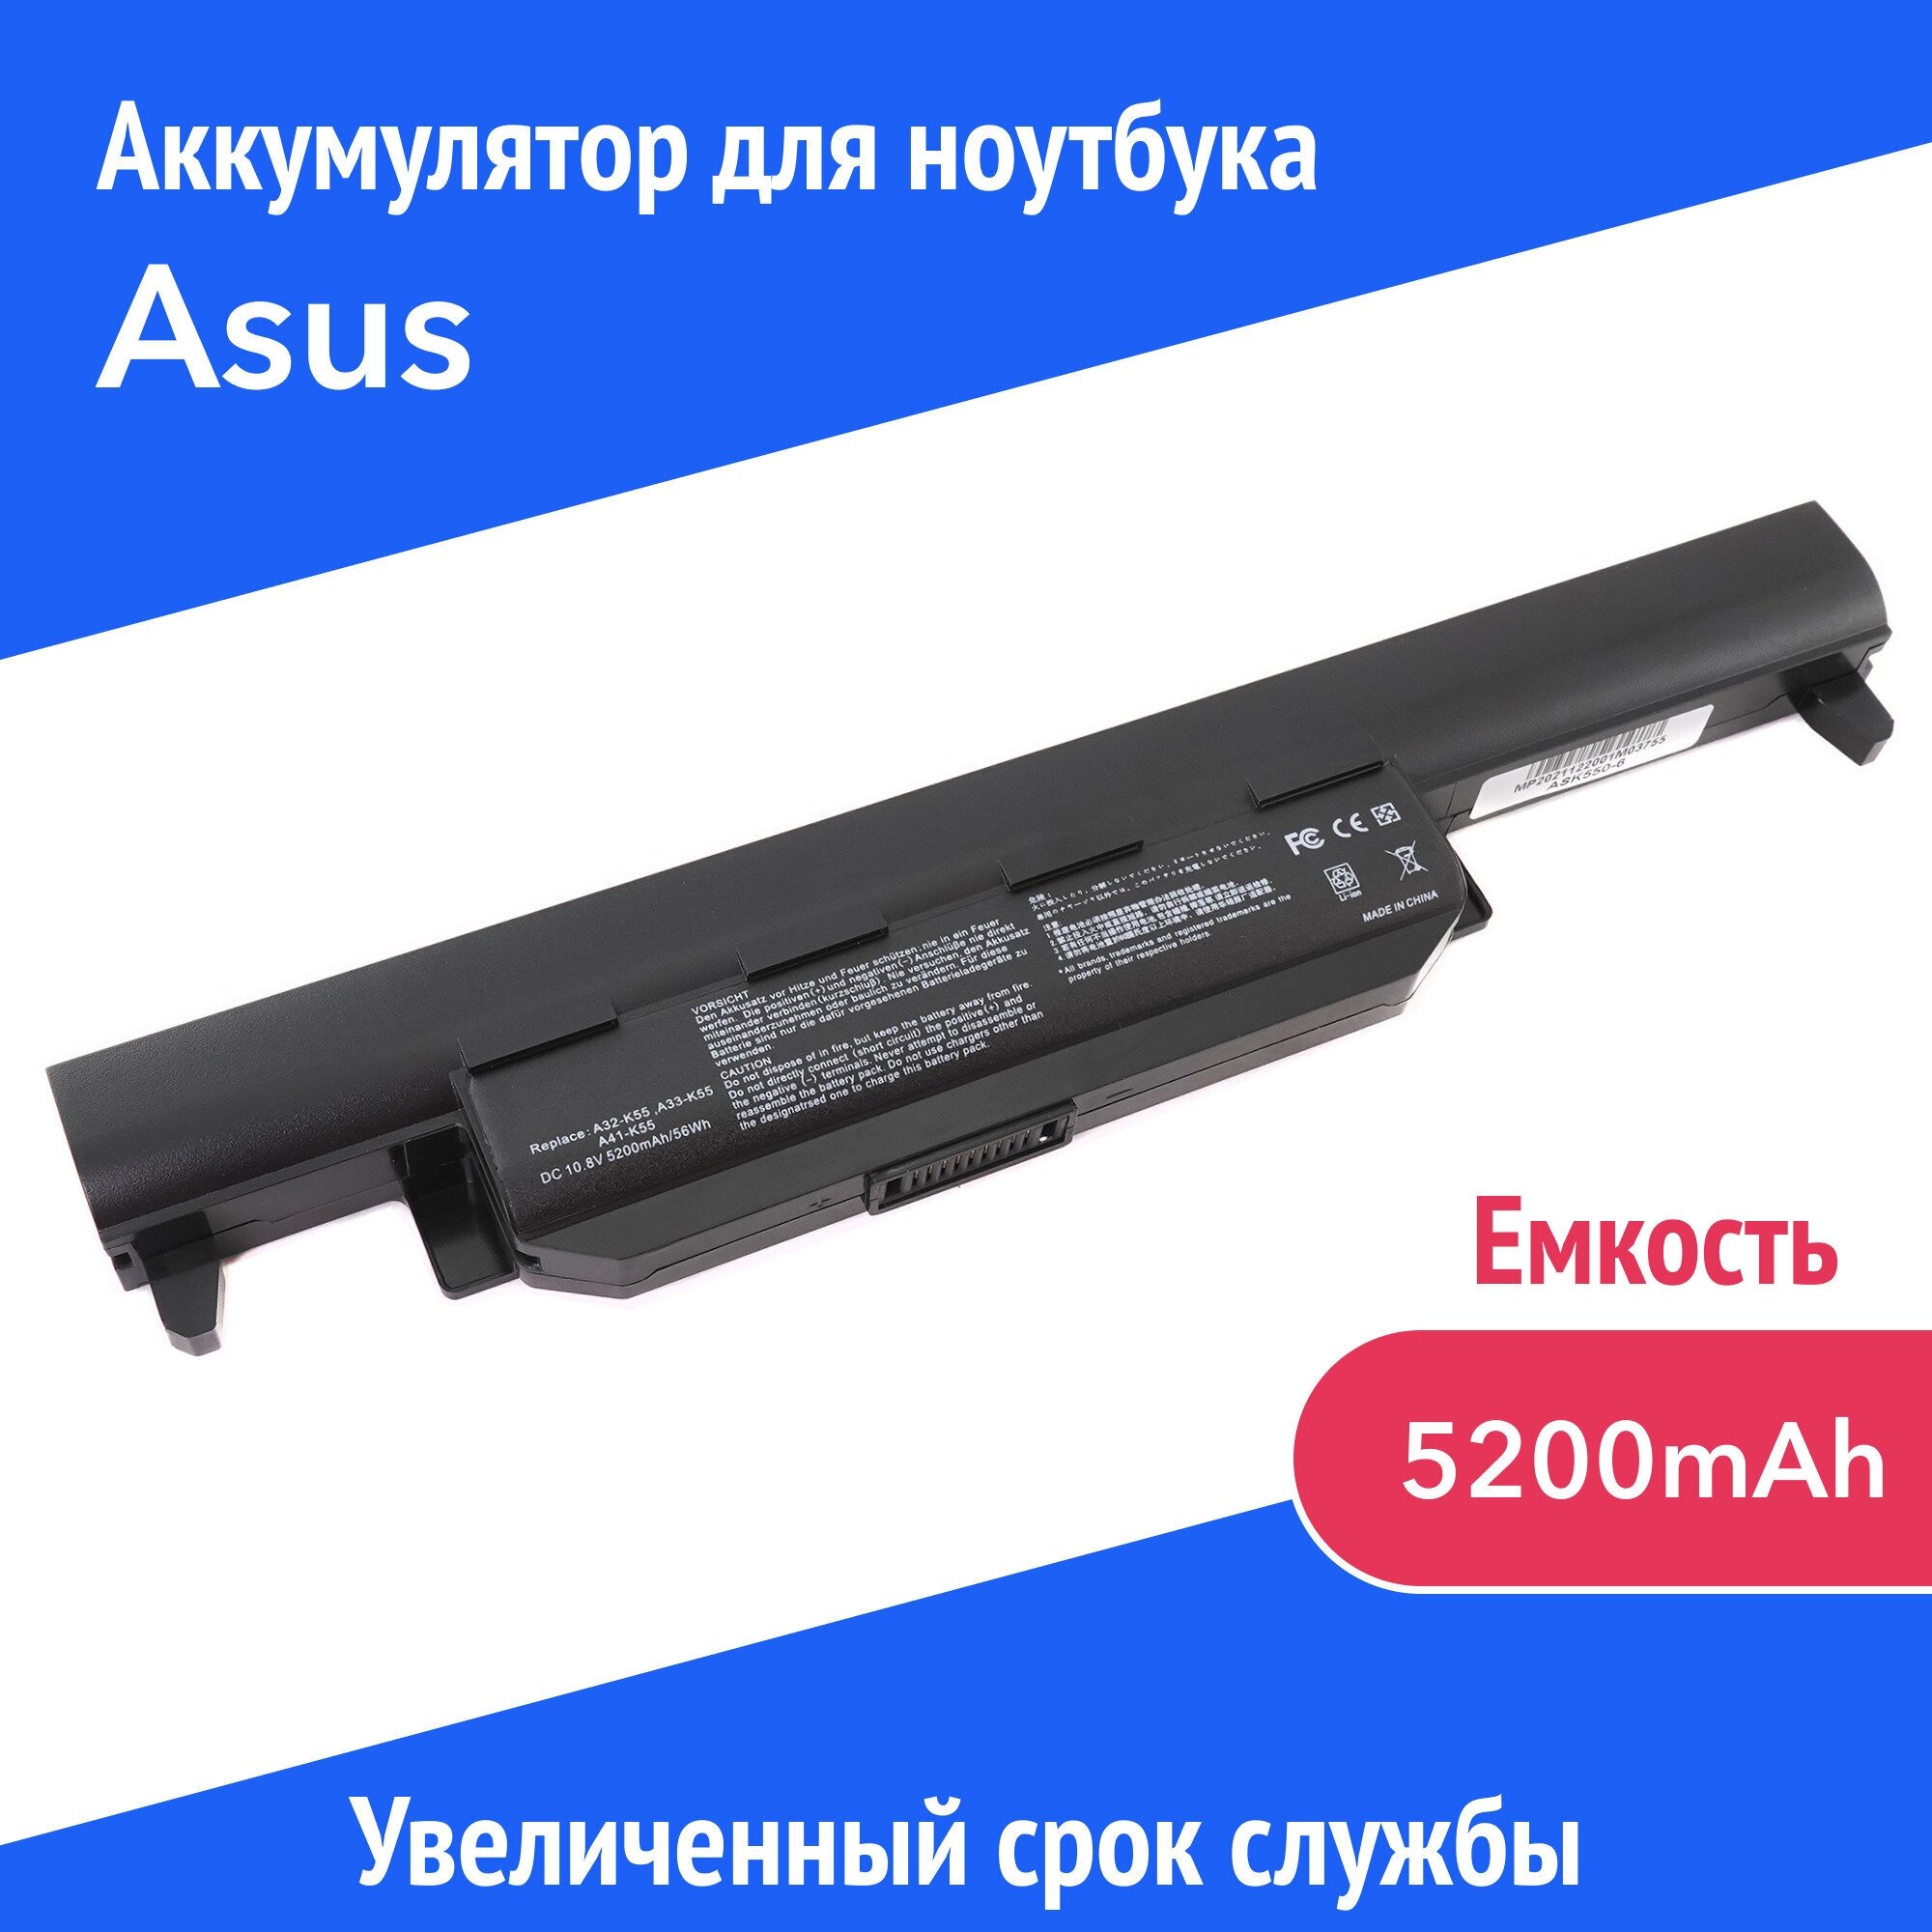 Аккумулятор A32-K55 для Asus A45D / A45N / A55A / A75D / K45D / K55D / X55A (A33-K55 A41-K55) 5200mAh